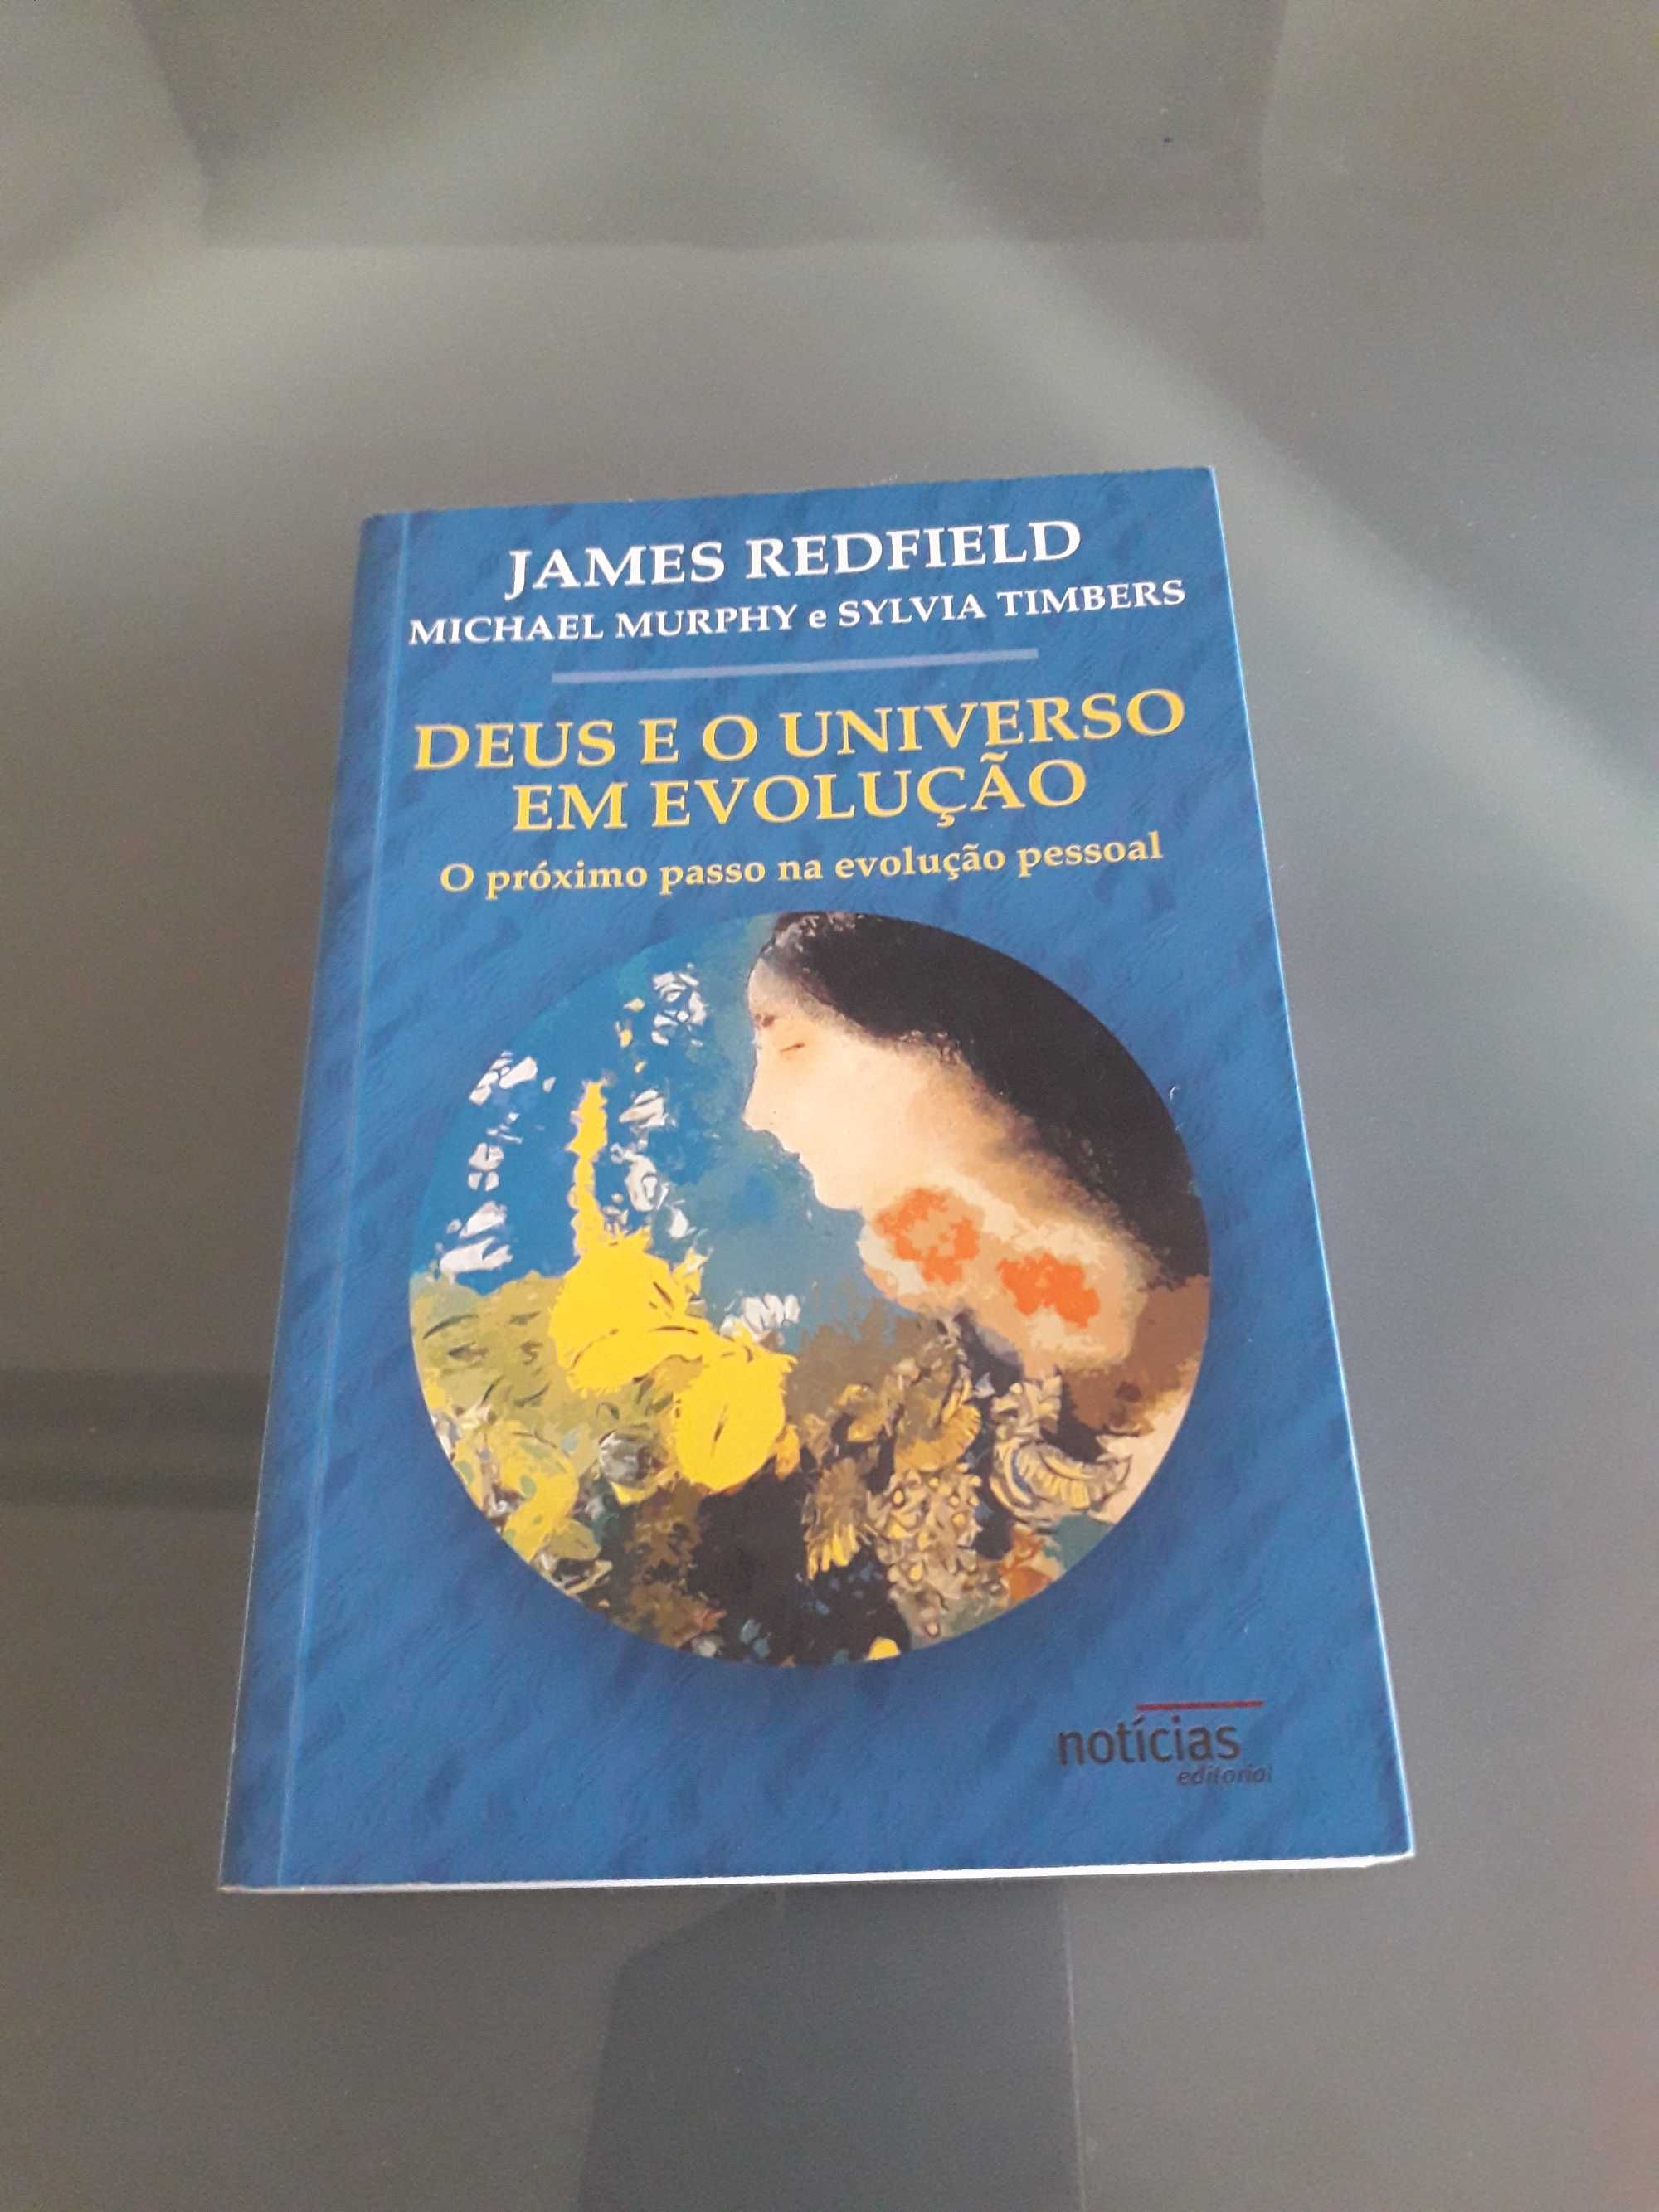 Livro de James Redfield